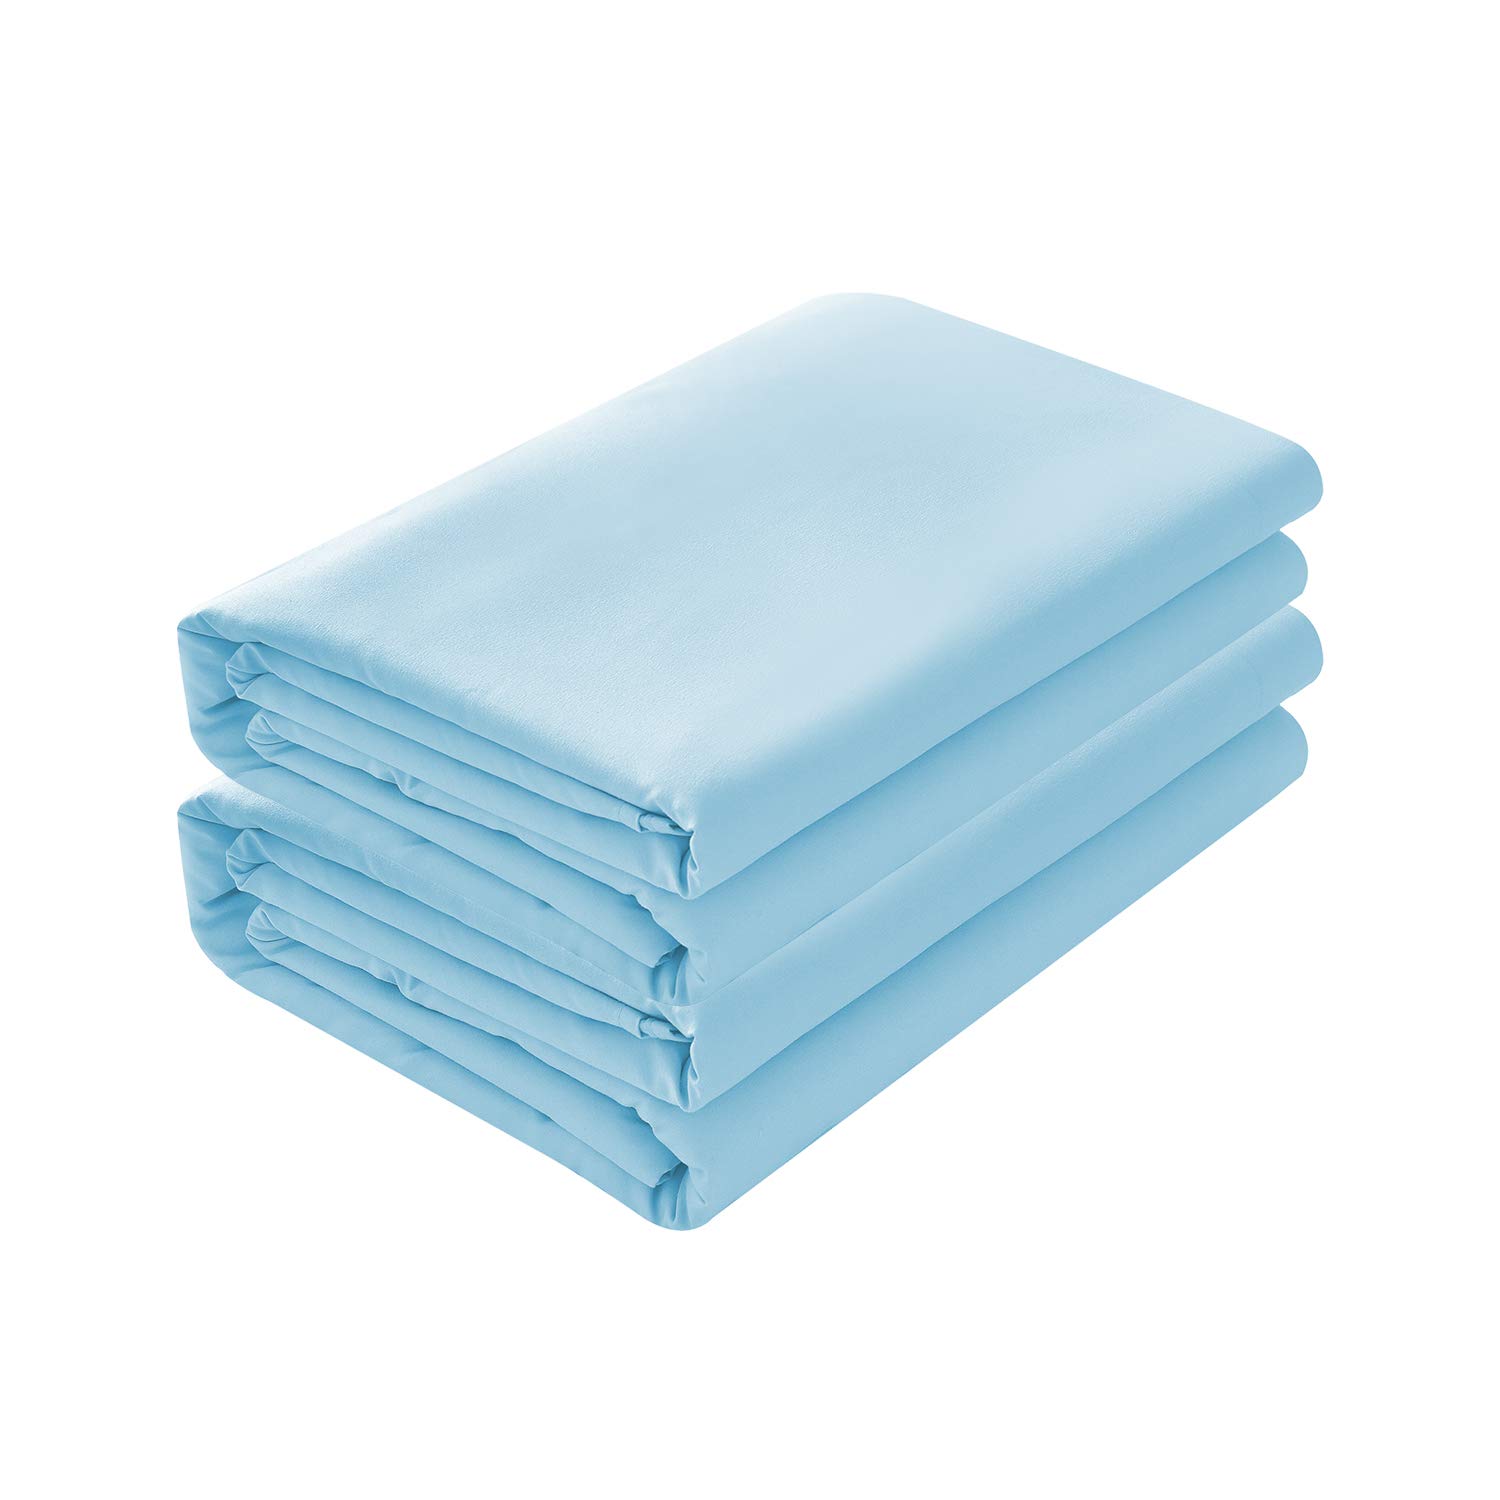 Basic choice 2-Pack Flat Sheets, Breathable Series Bed Top Sheet, Wrinkle, Fade Resistant, Standard 100 by Oeko-Tex - Kingcal Ki